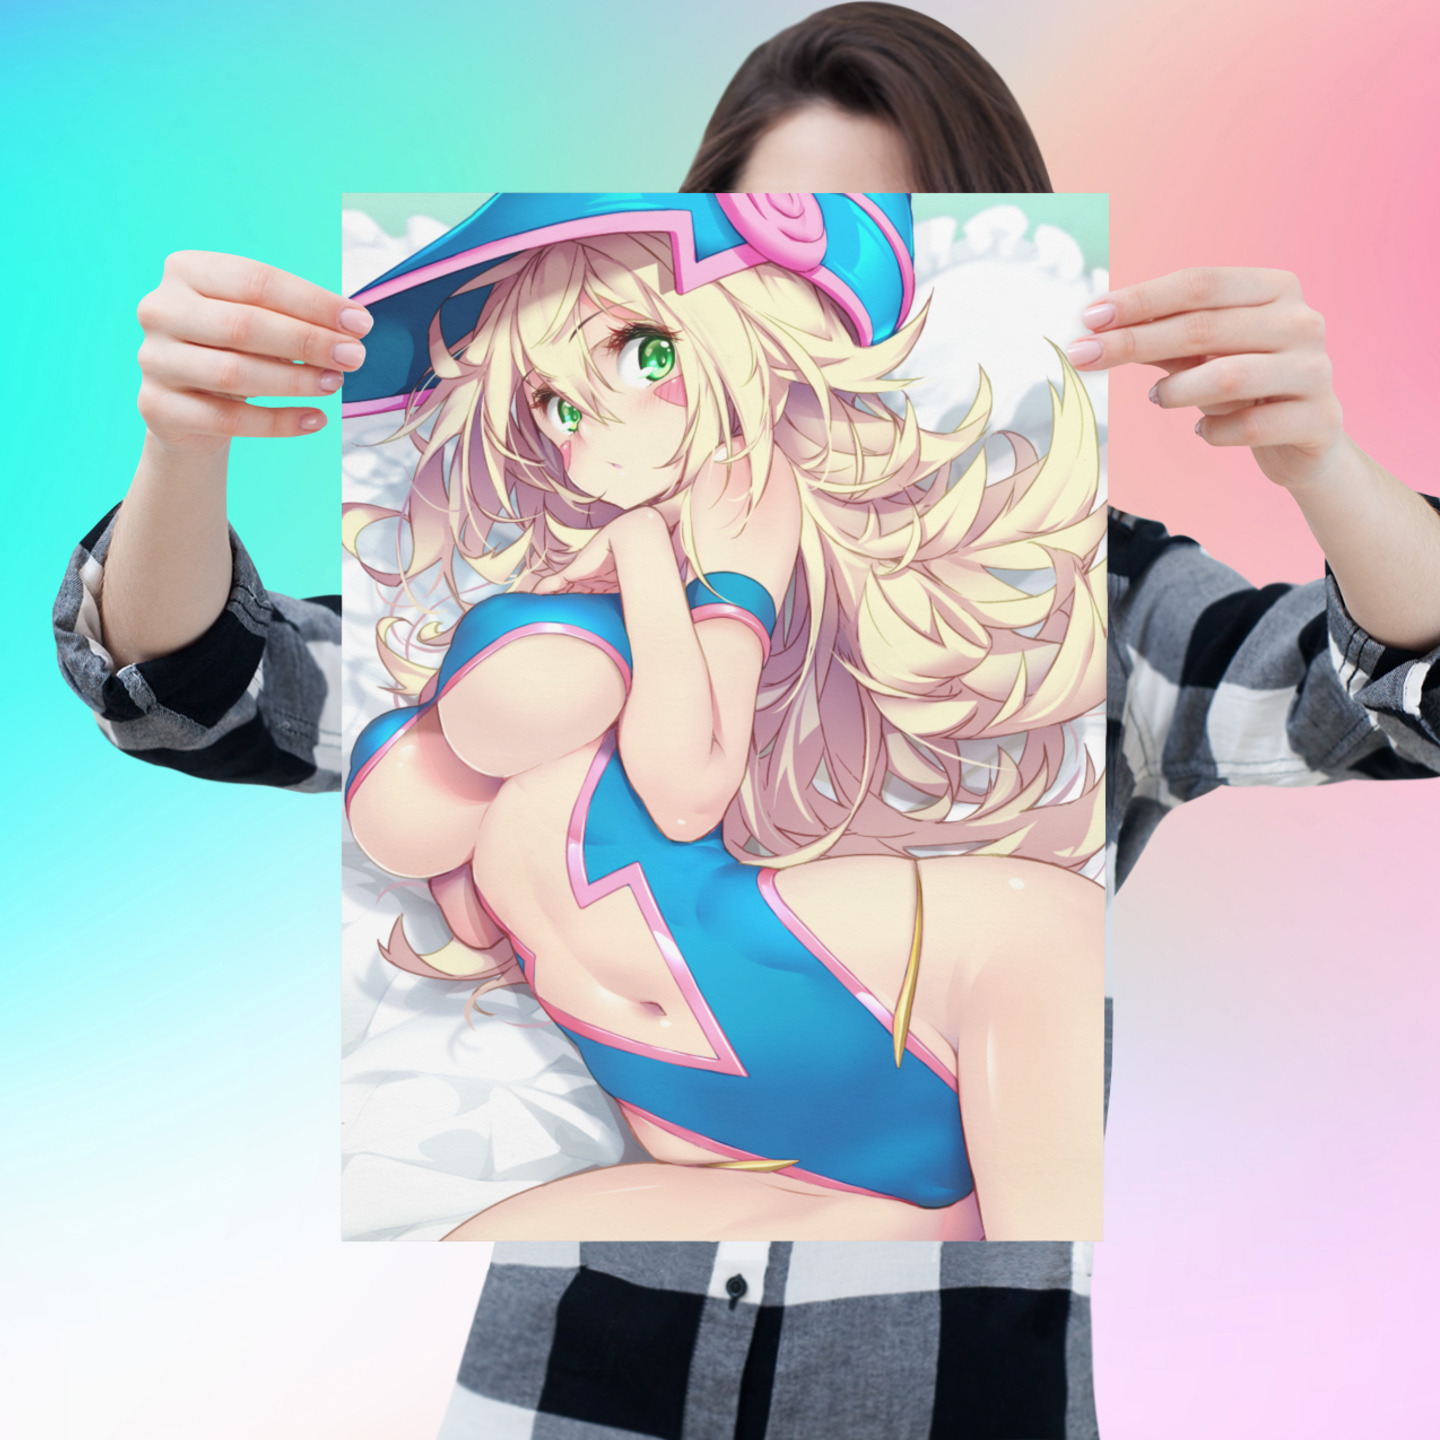 DARK MAGICIAN GIRL Sexy Anime Waifu Poster 13X19 Art USA Seller